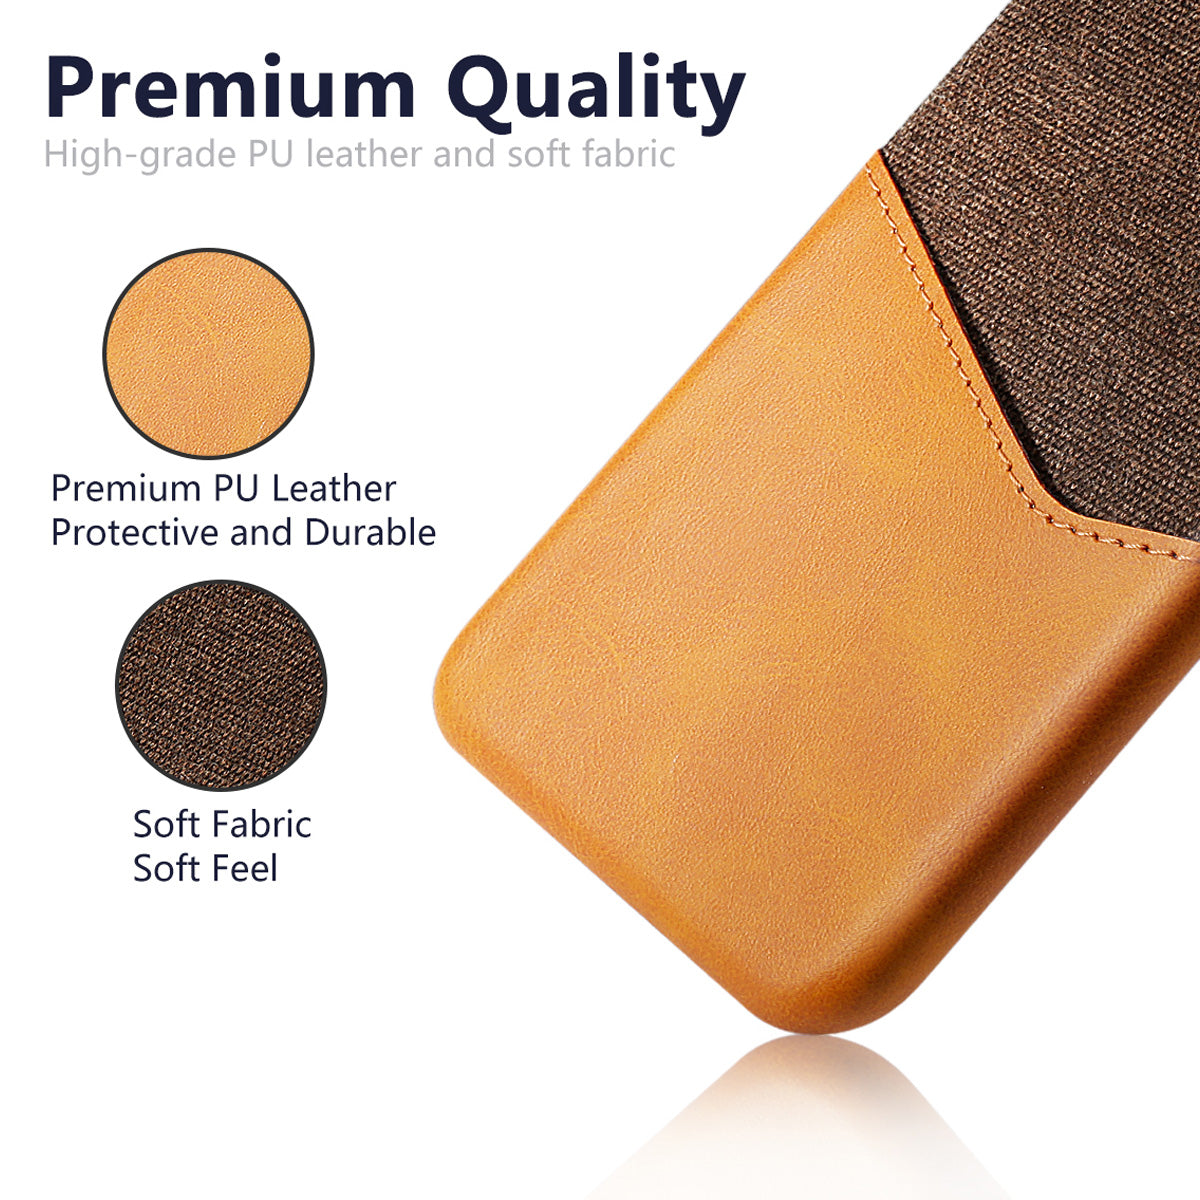 Excelsior Premium Card Holder | Hard | Leather Back Cover case for Oppo Reno 4 Pro